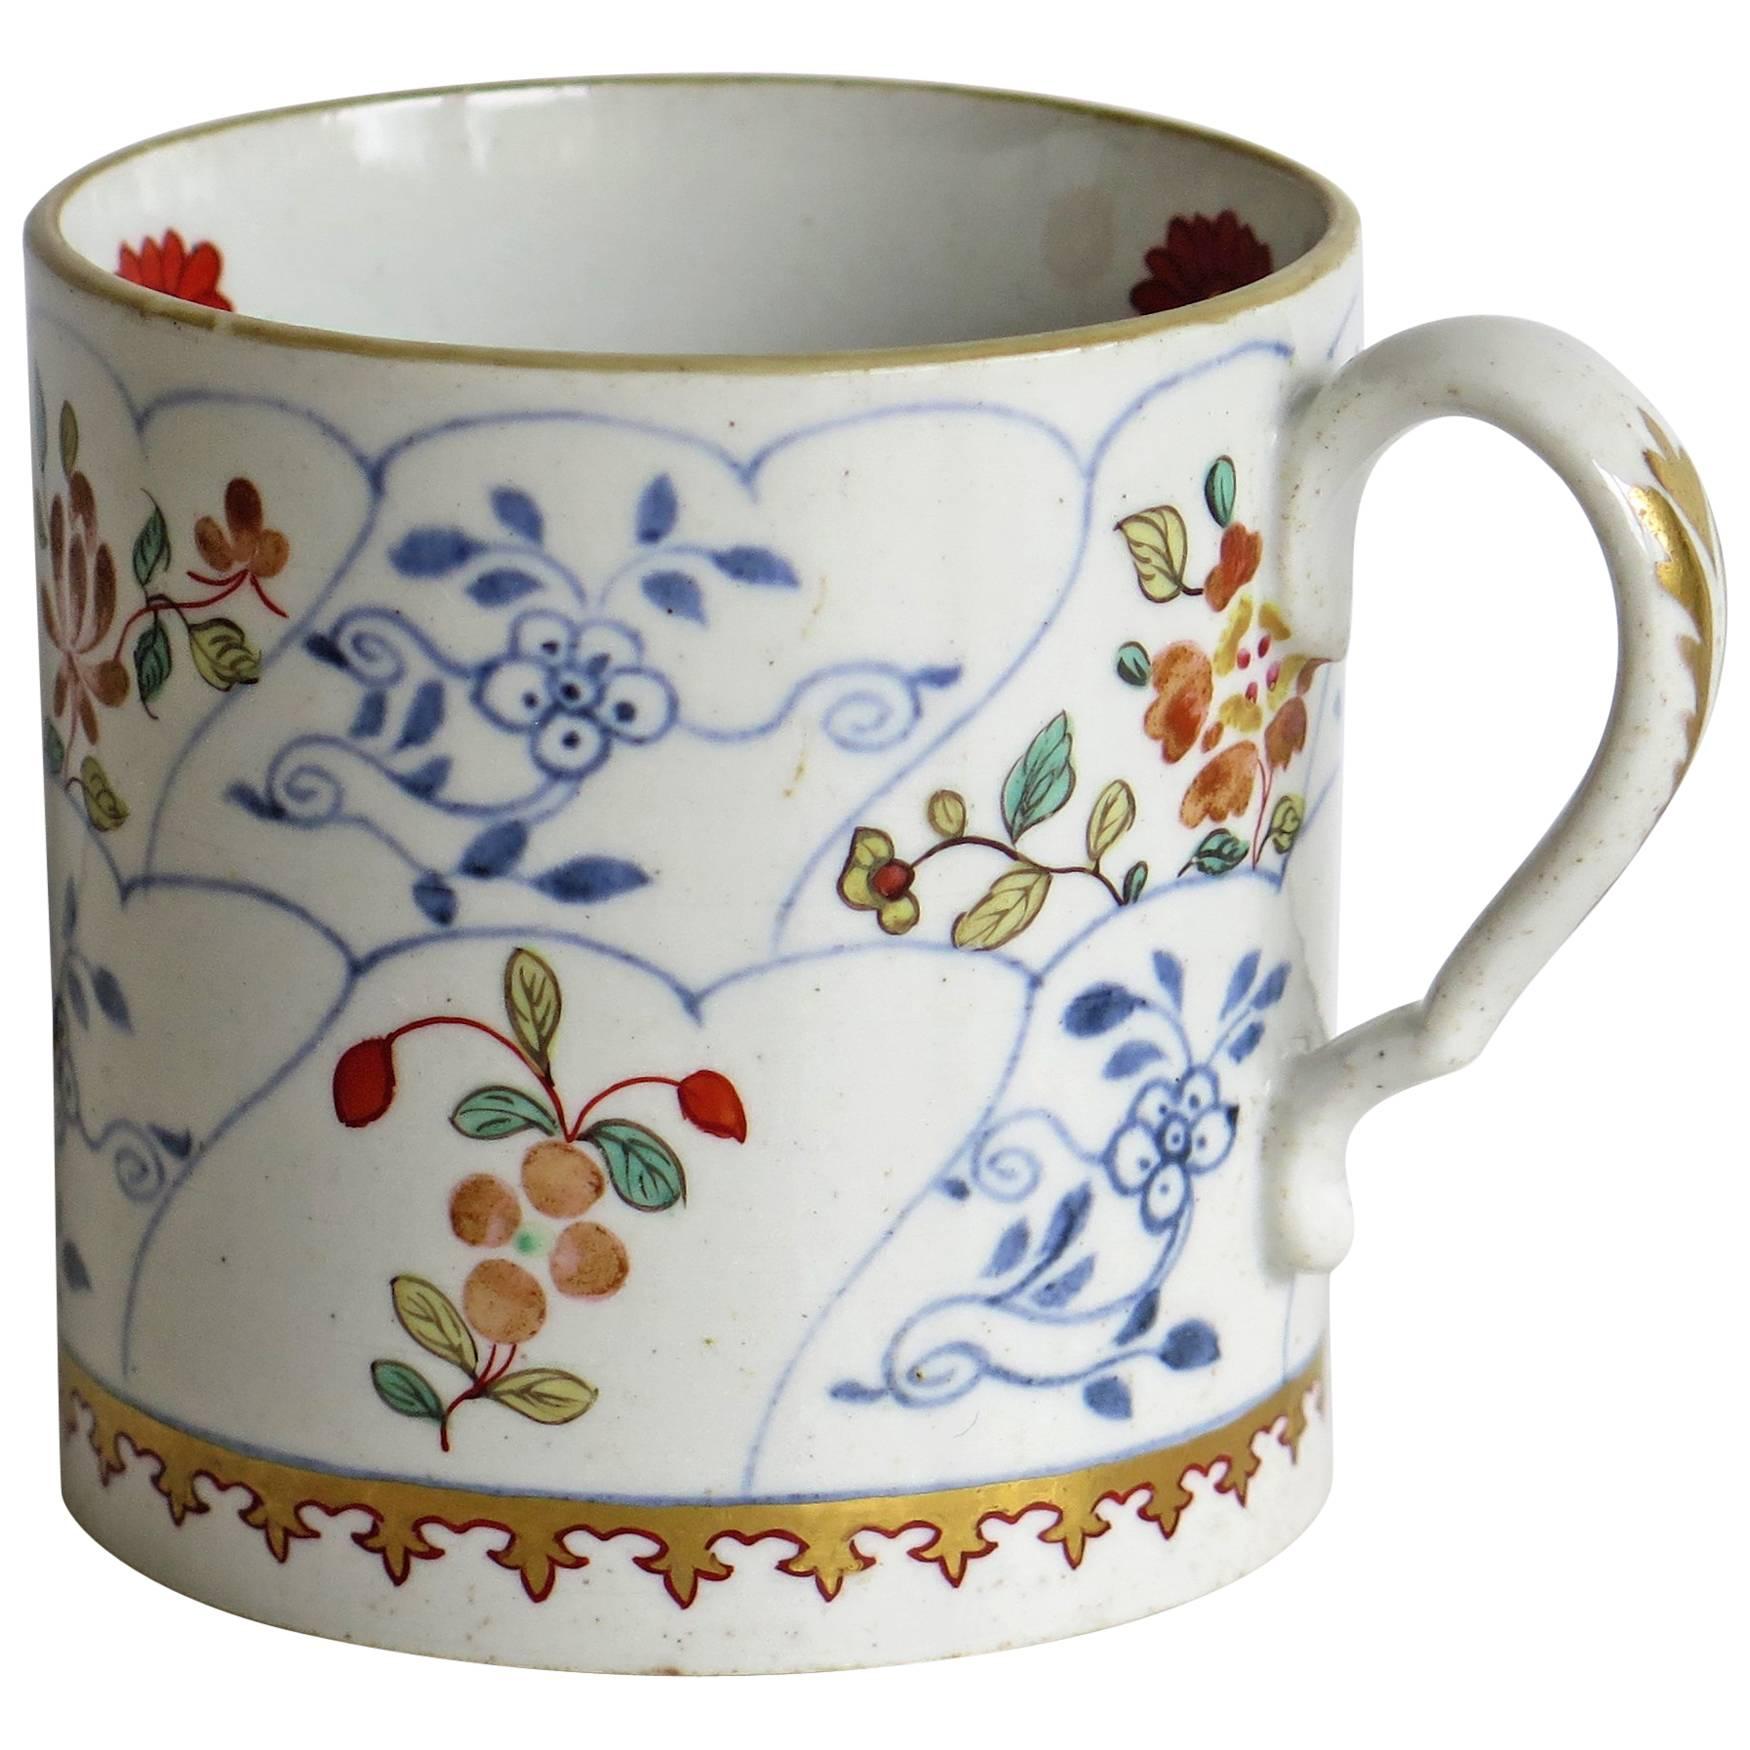 Copeland and Garrett Late Spode, Coffee Can, Japan Brocade Pattern, circa 1835